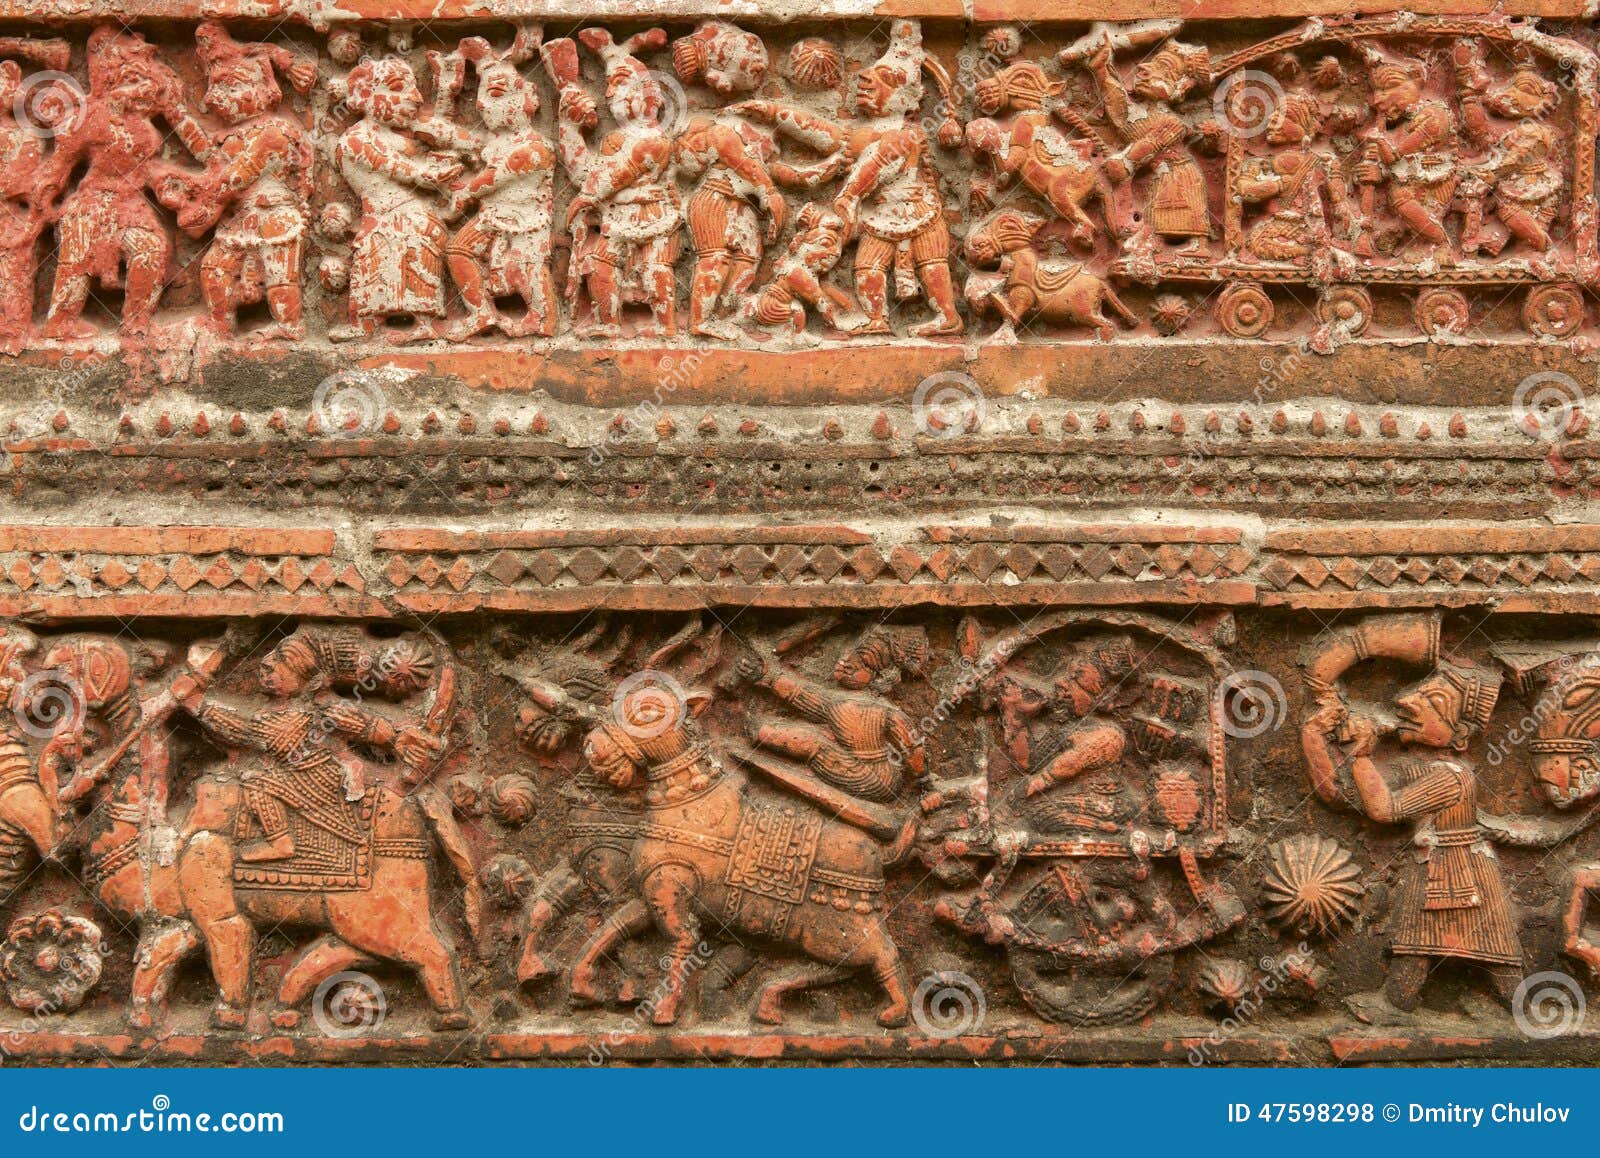 terracota figures at pancharatna govinda temple in puthia, bangladesh